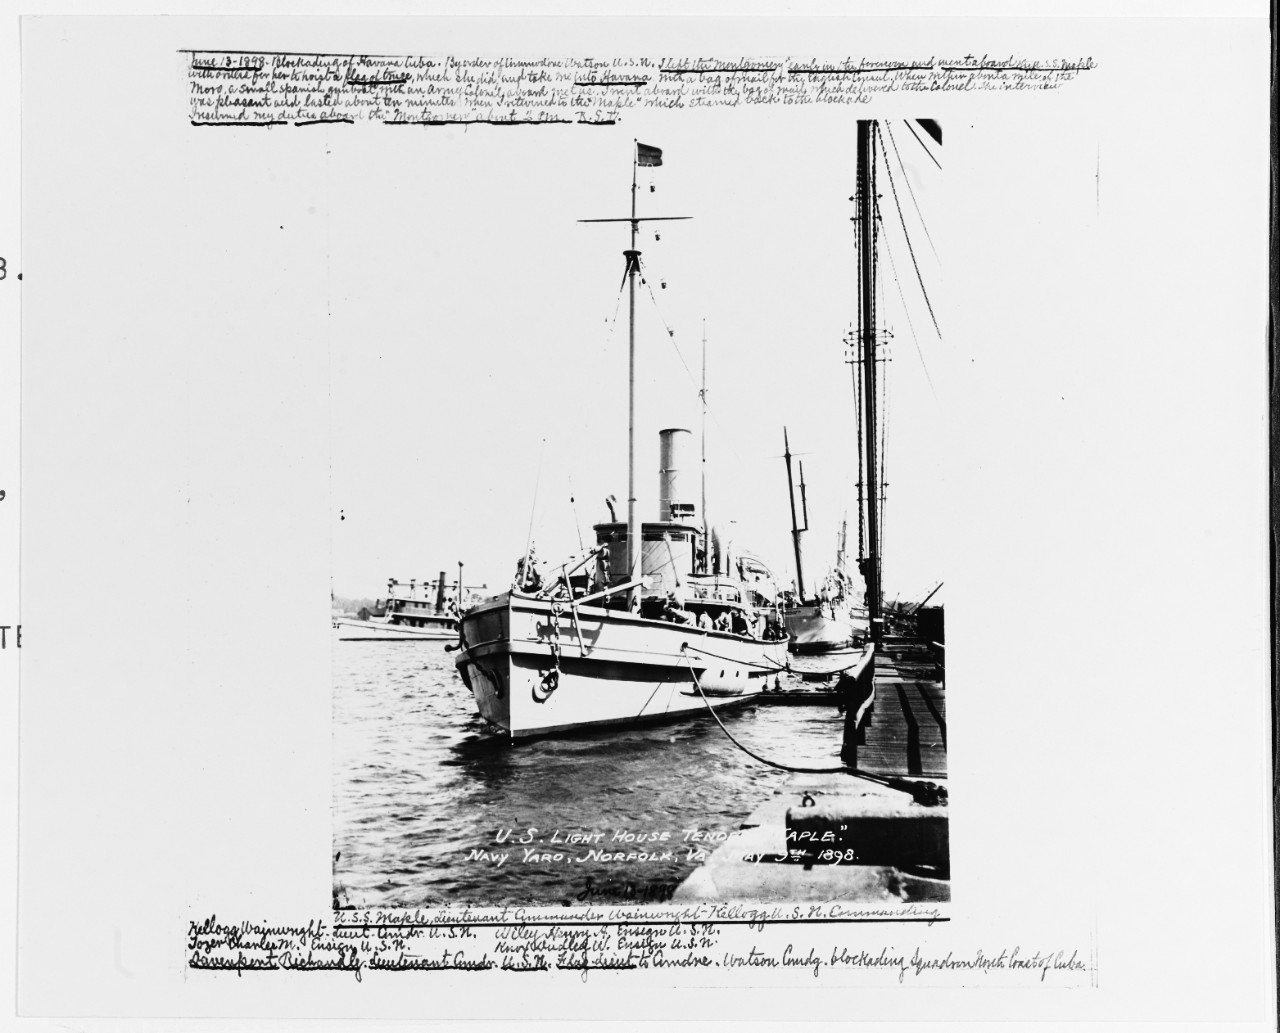 US light house tender MAPLE, Norfolk Navy Yard, Virginia, 9 May 1898. 